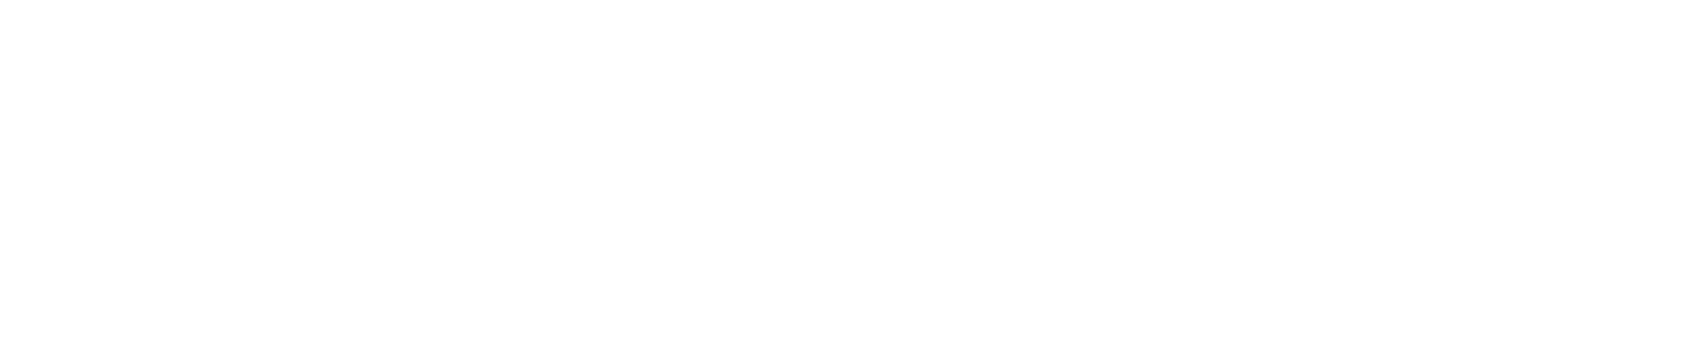 Boston Portfolio Advisors logo in white